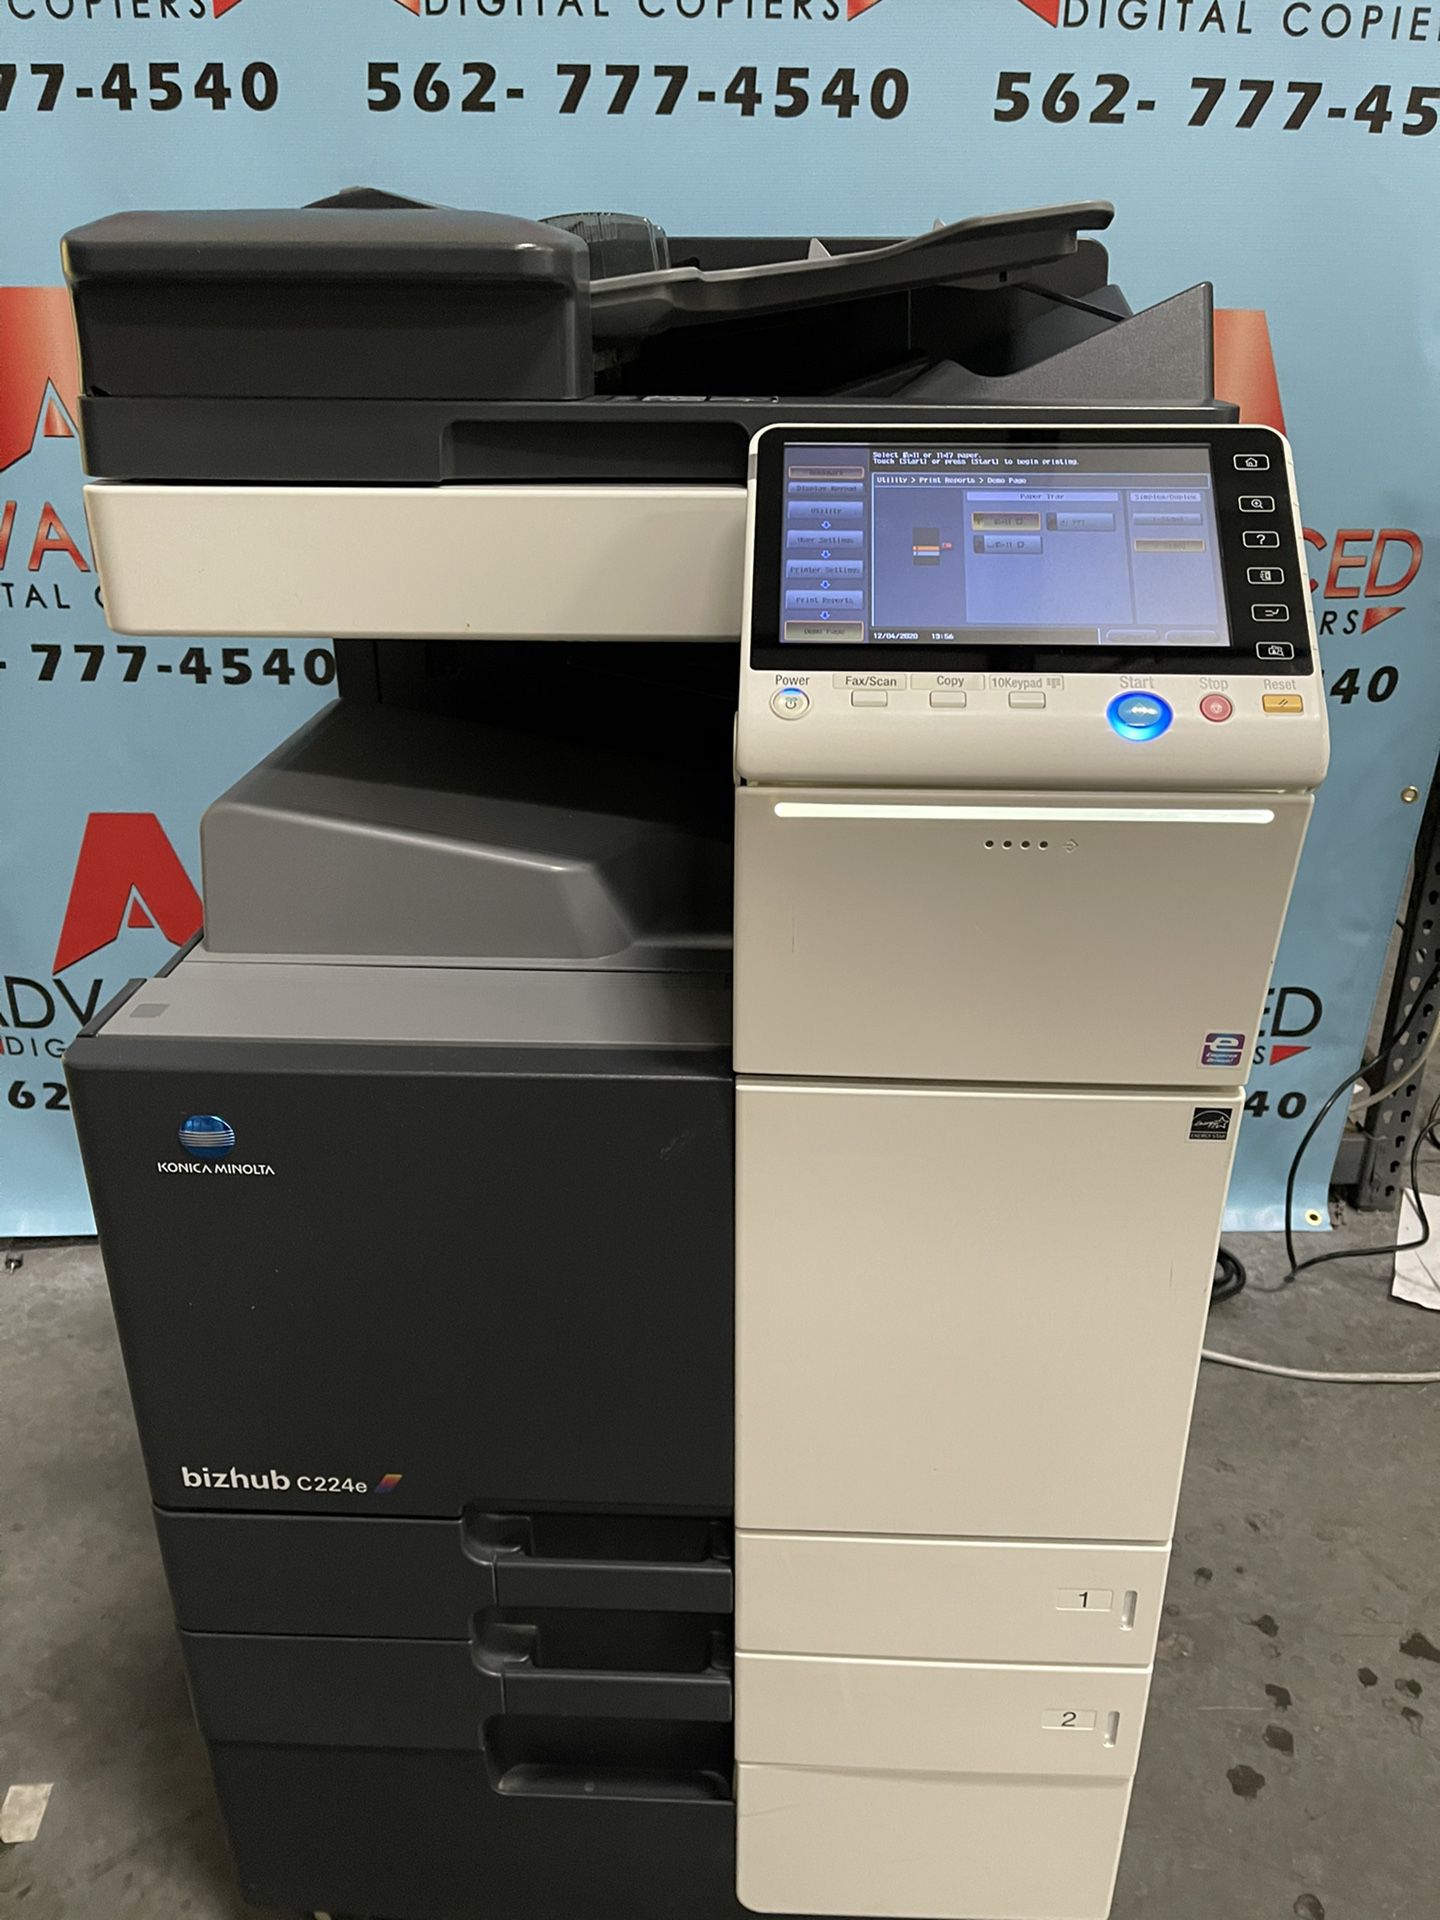 Konica C224 digital color printer scanner fax mfp